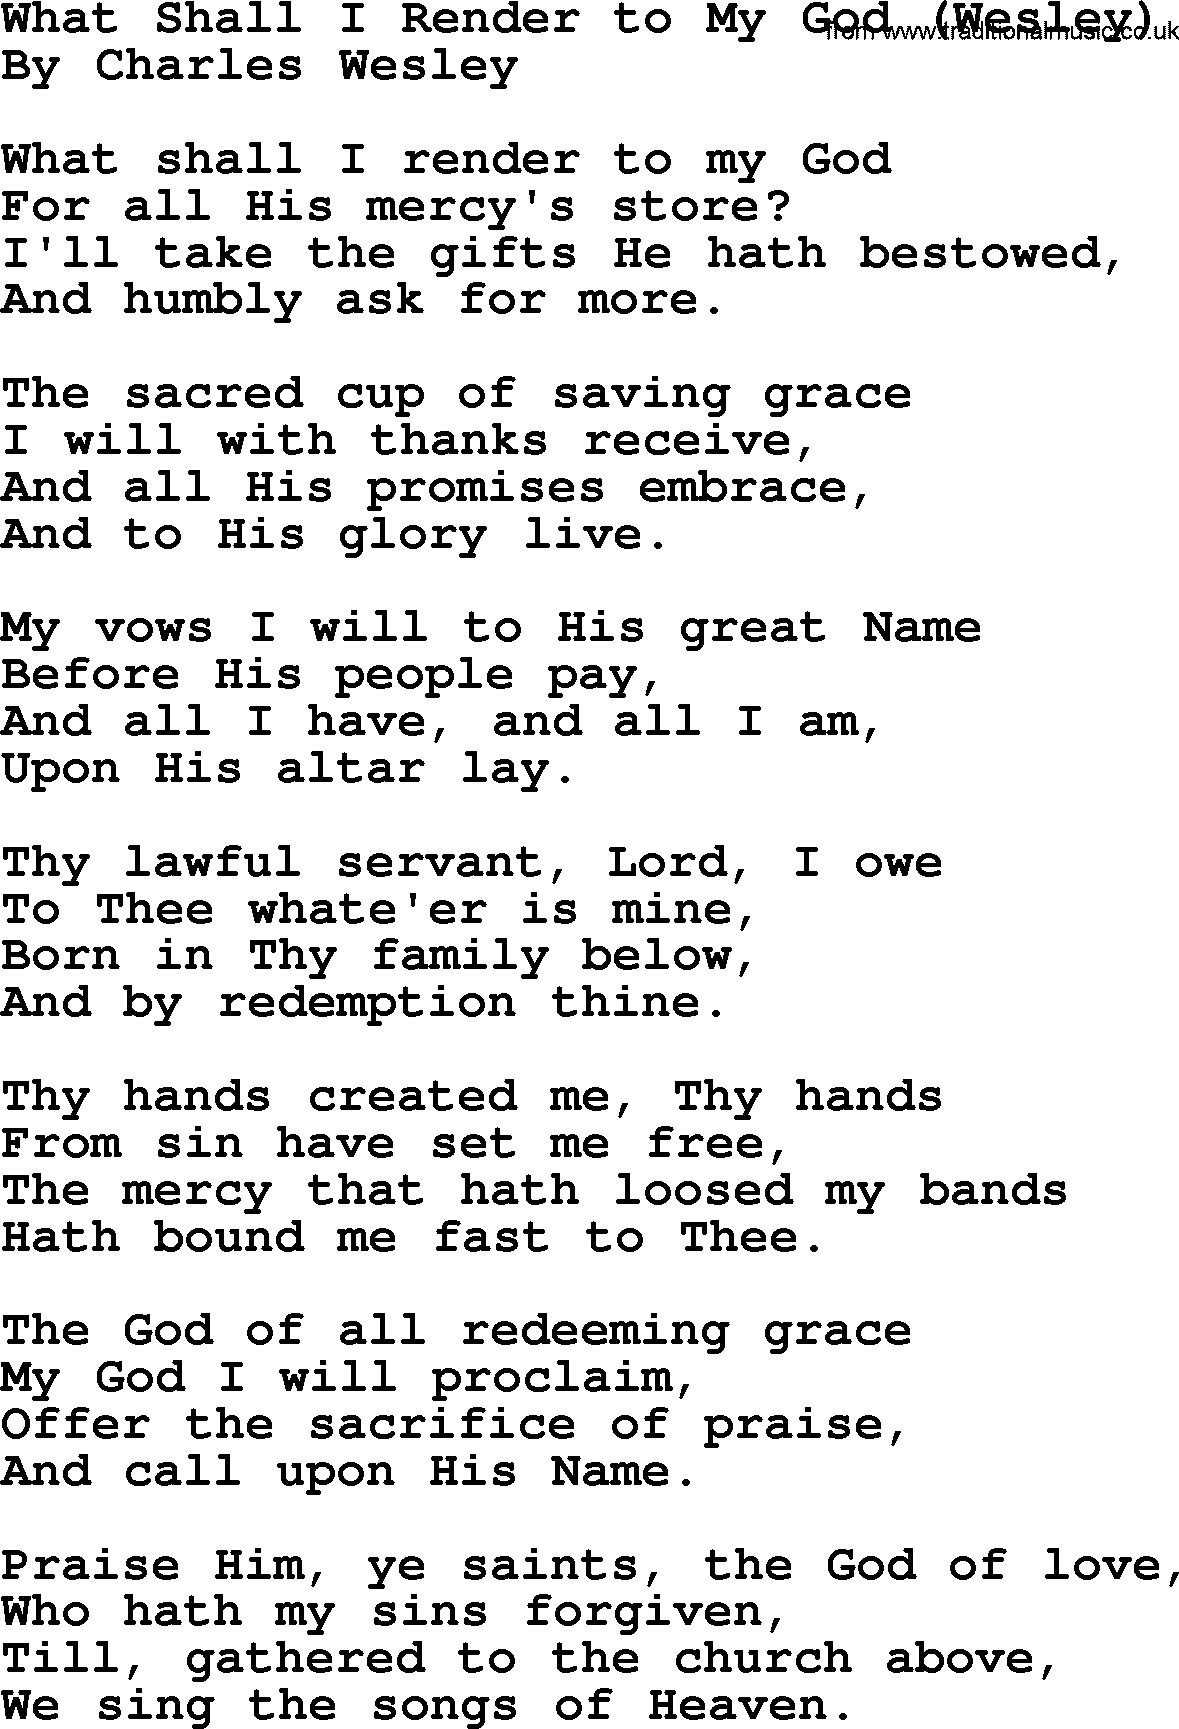 Charles Wesley hymn: What Shall I Render to My God (Wesley), lyrics